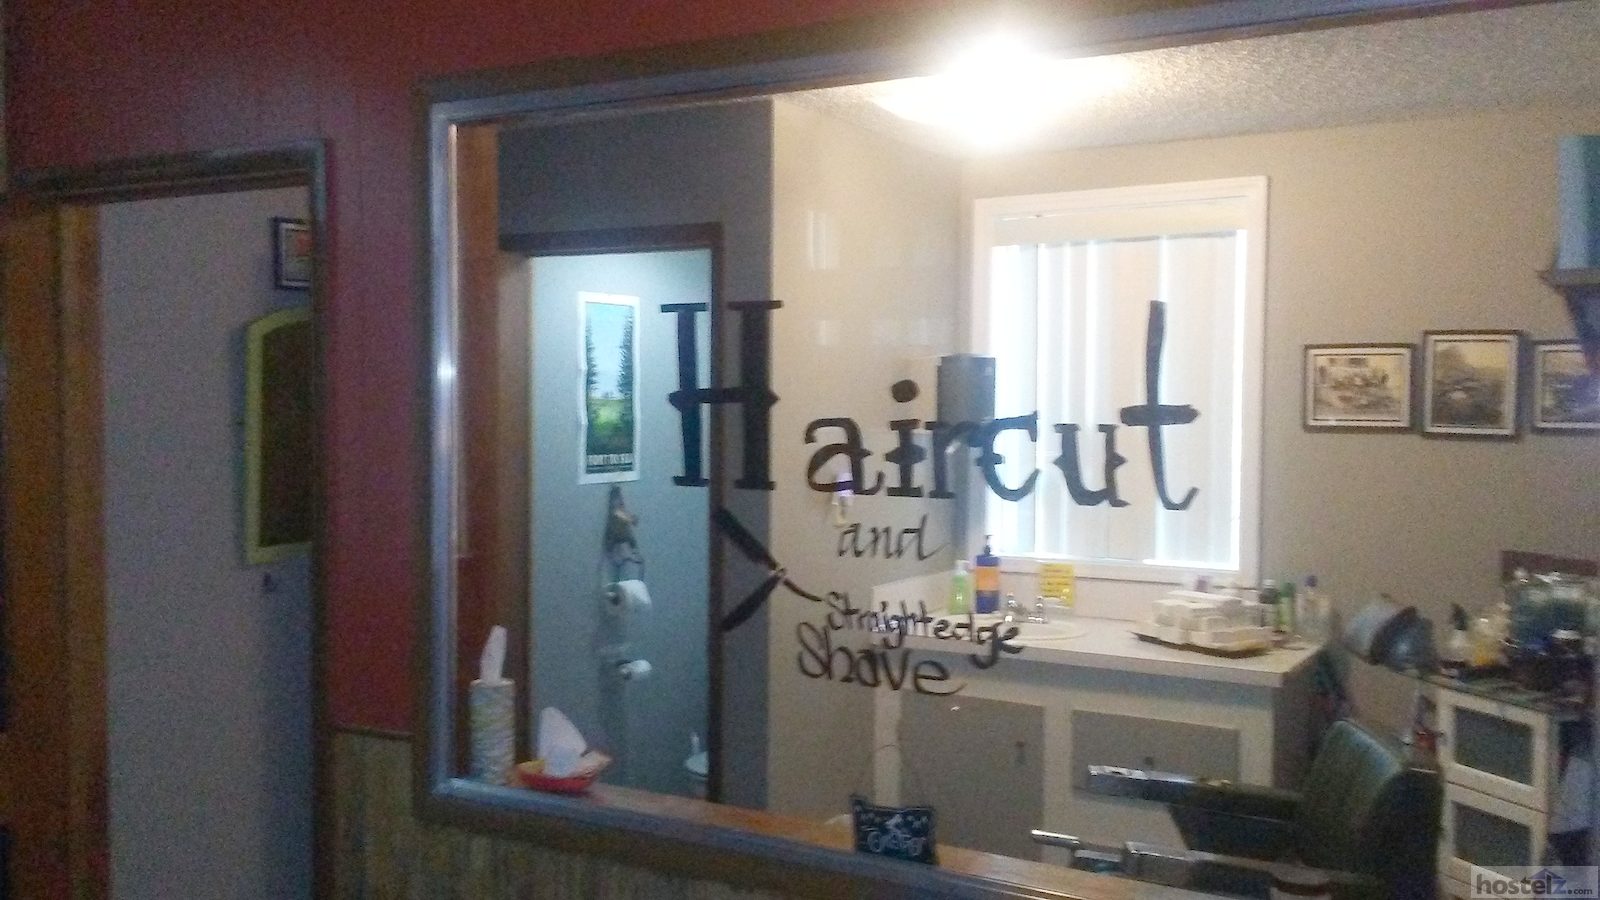 Barber Shop and Bathroom